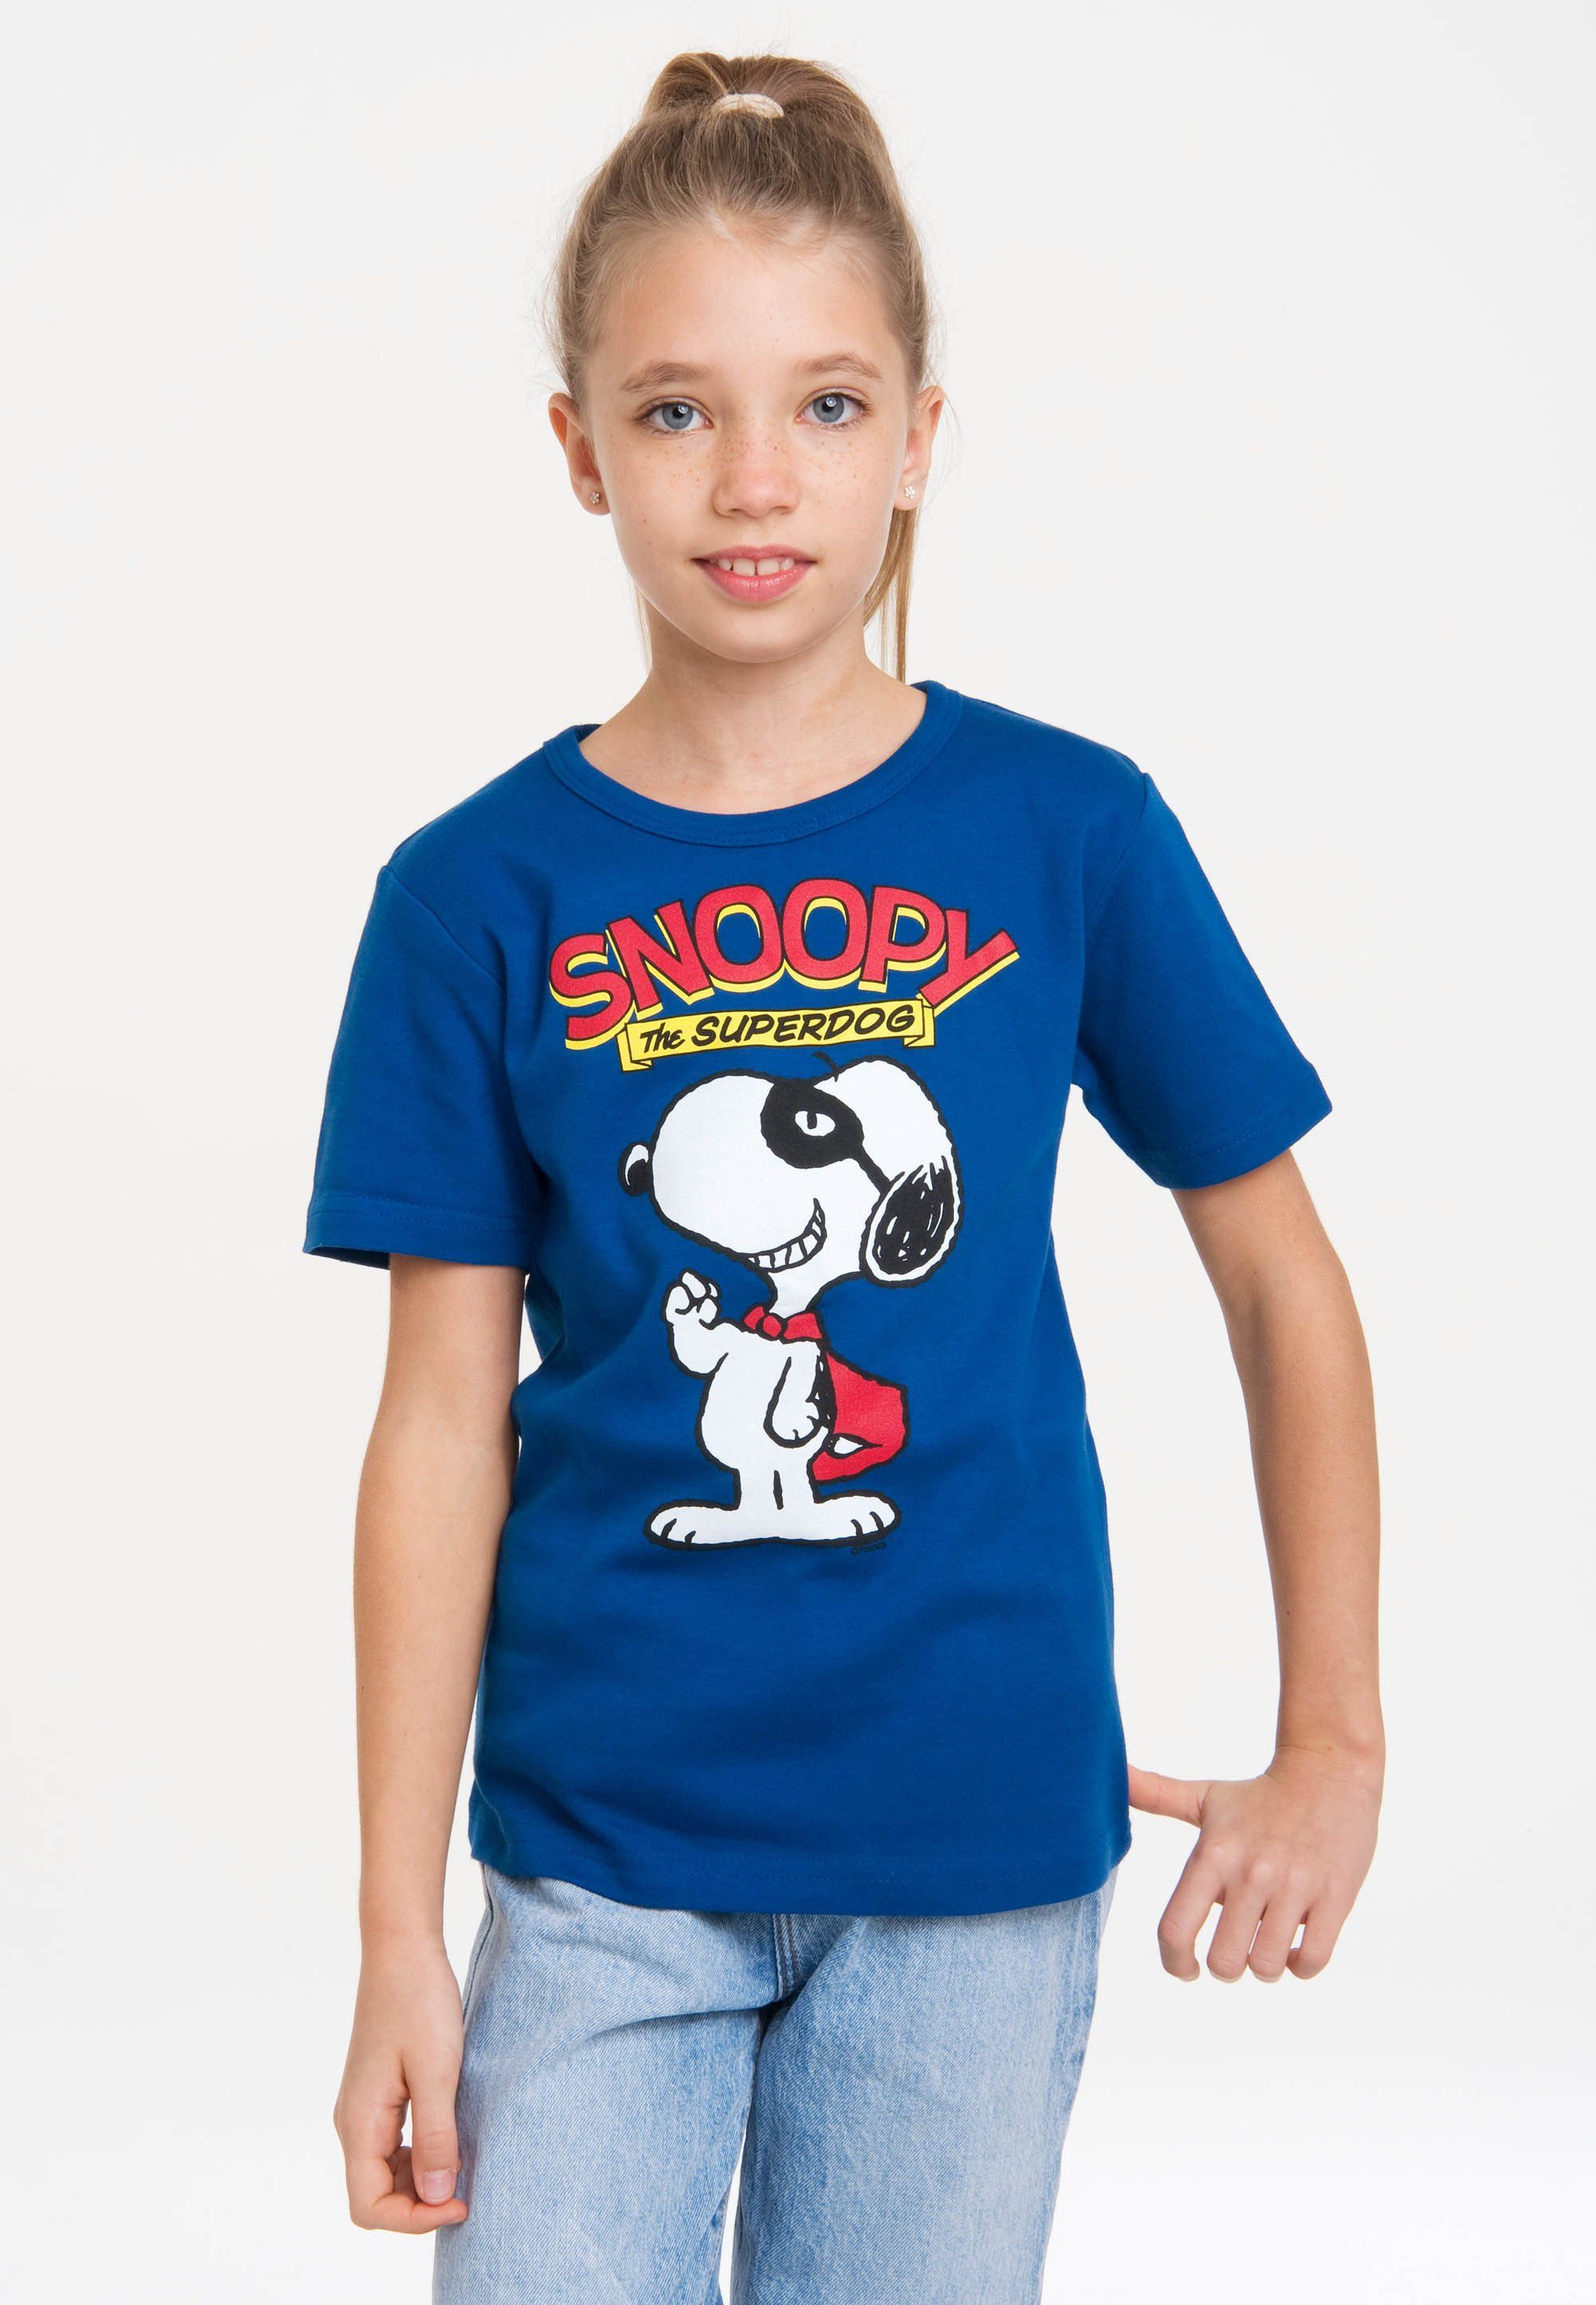 LOGOSHIRT tollem - Snoopy-Design Peanuts Superdog T-Shirt Snoopy mit